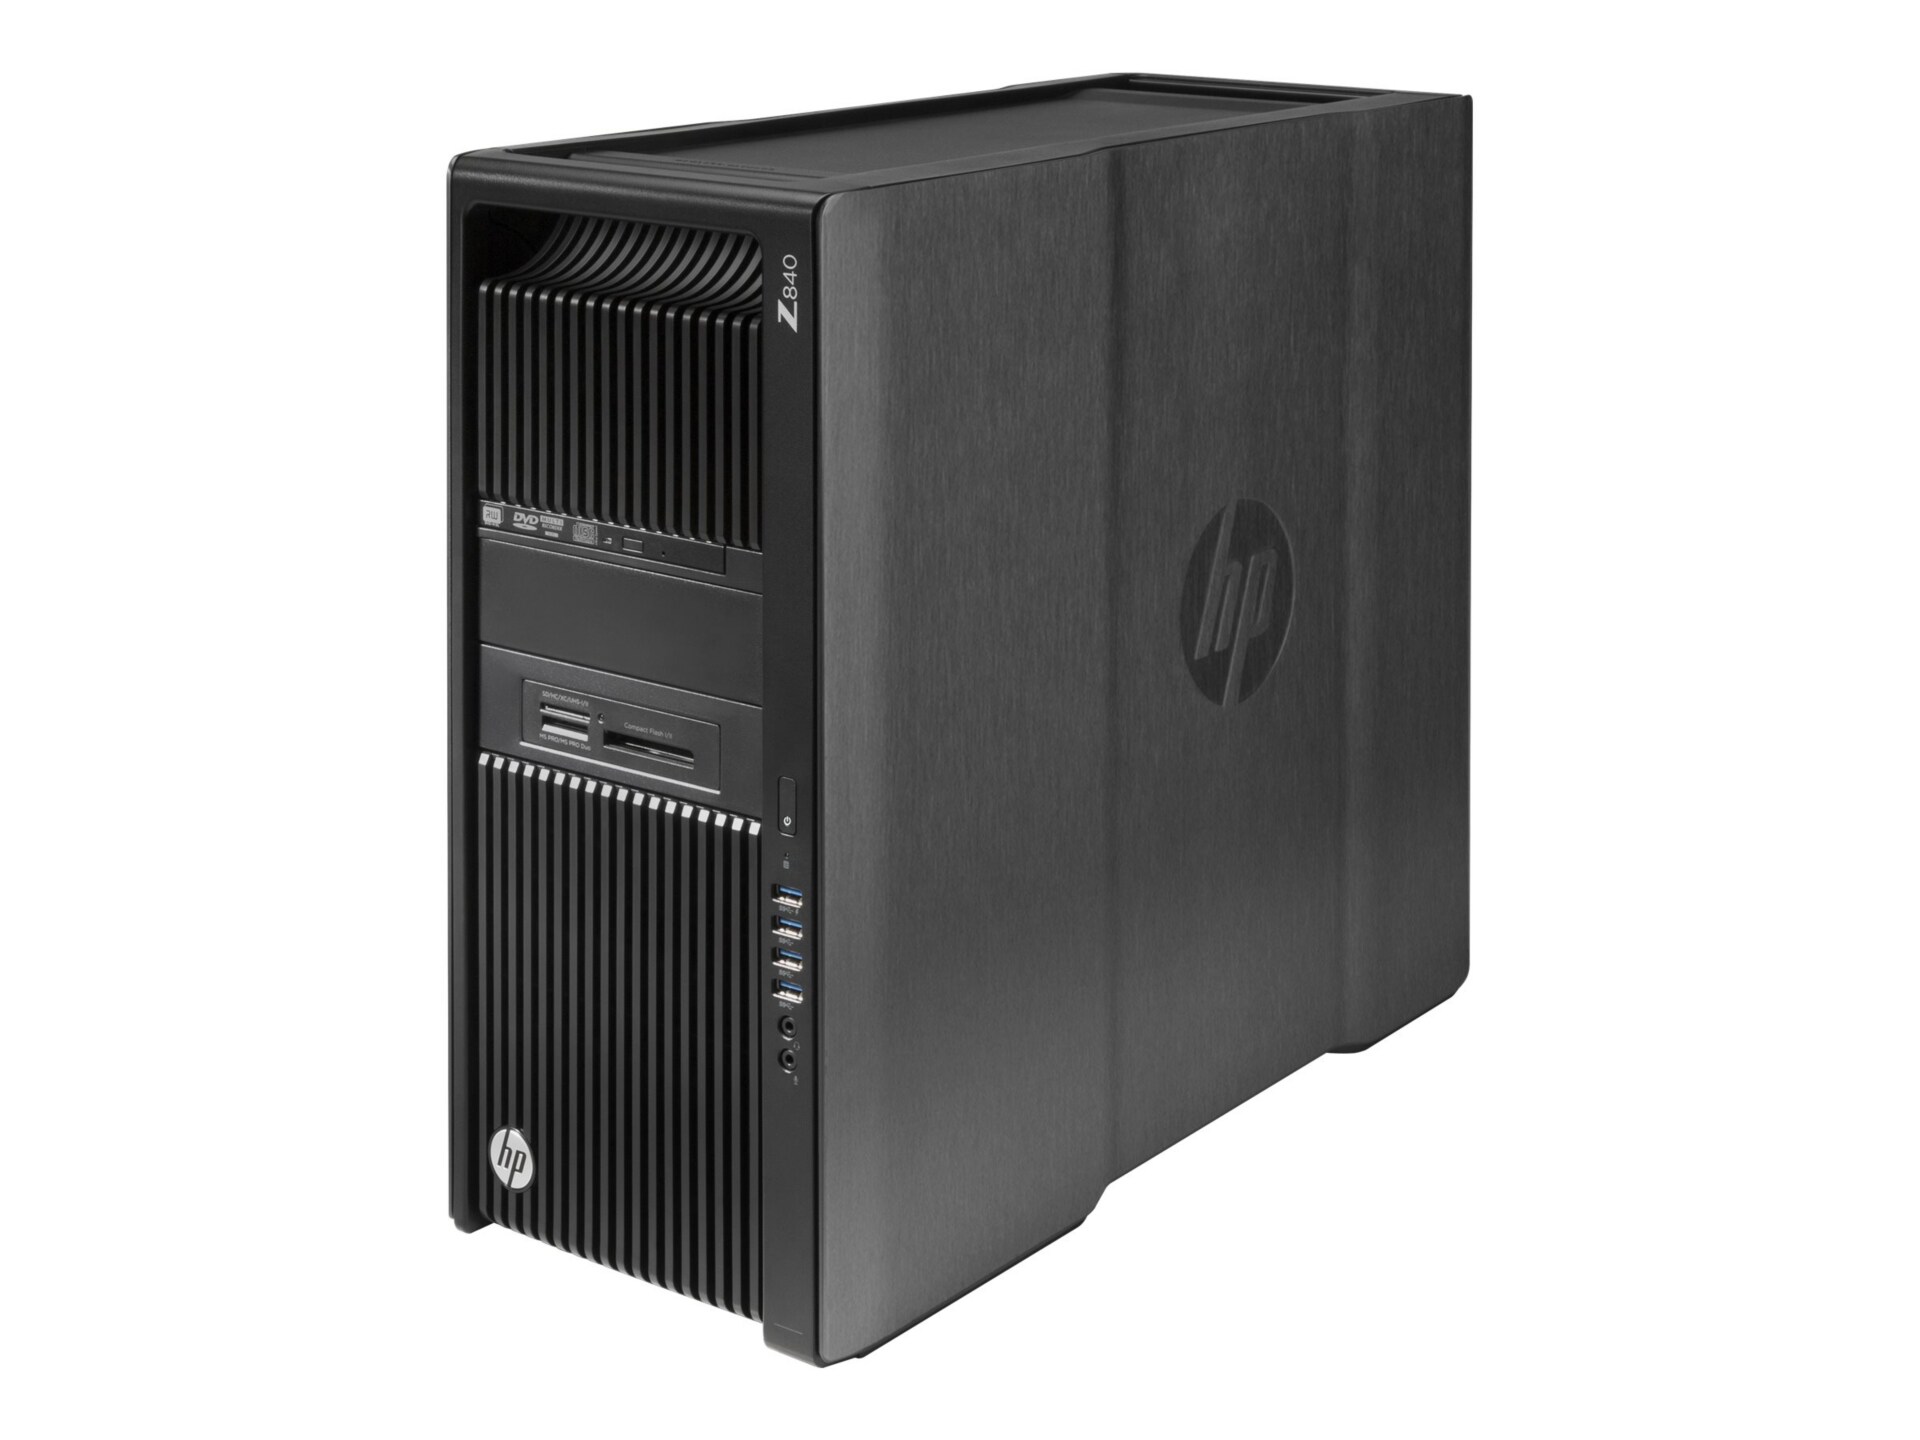 HP Workstation Z840 - tower - Xeon E5-2630V4 2.2 GHz - 16 GB - 256 GB - US